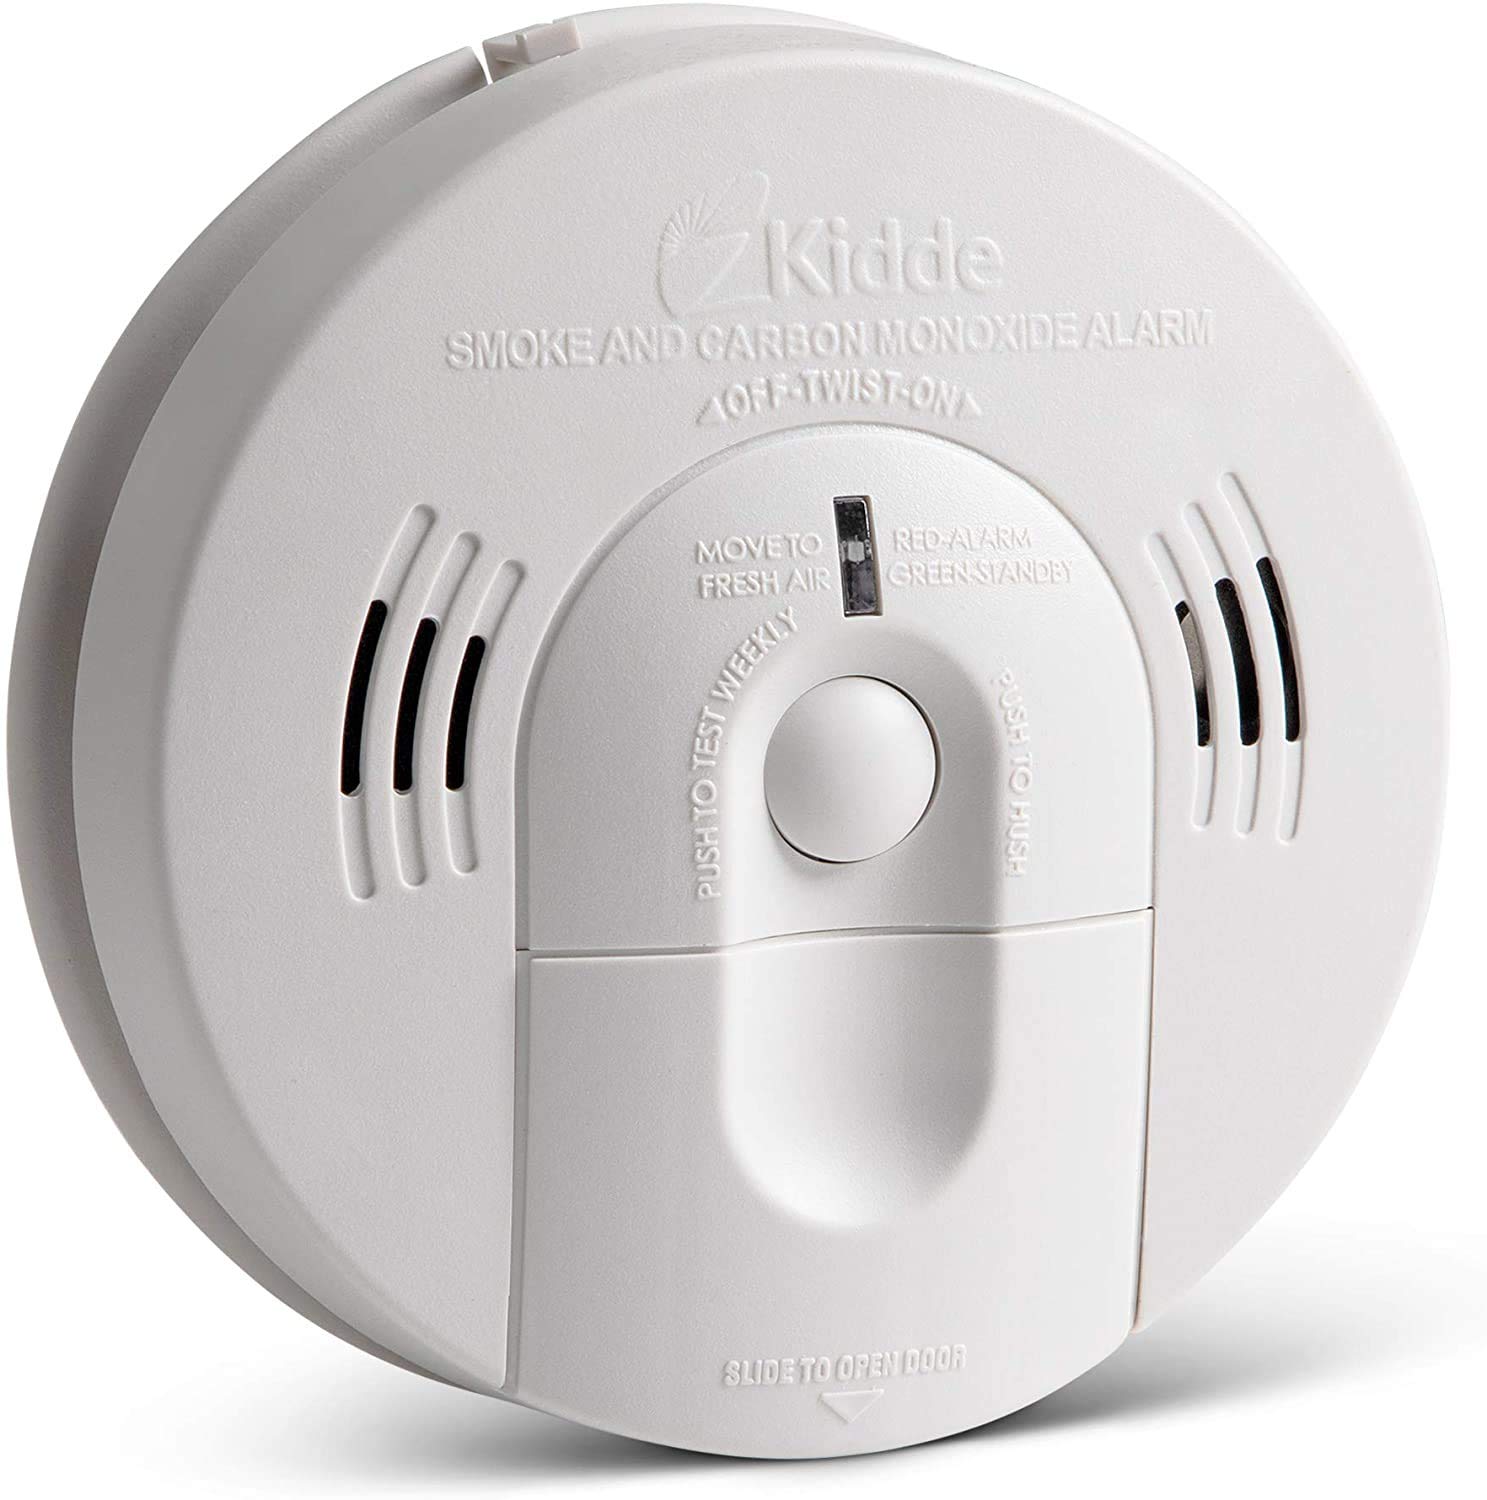 Kidde Battery Powered Combination Smoke & Carbon Monoxide Alarm w/ Voice Alert $22.36 + Free Shipping w/ Prime or on $25+